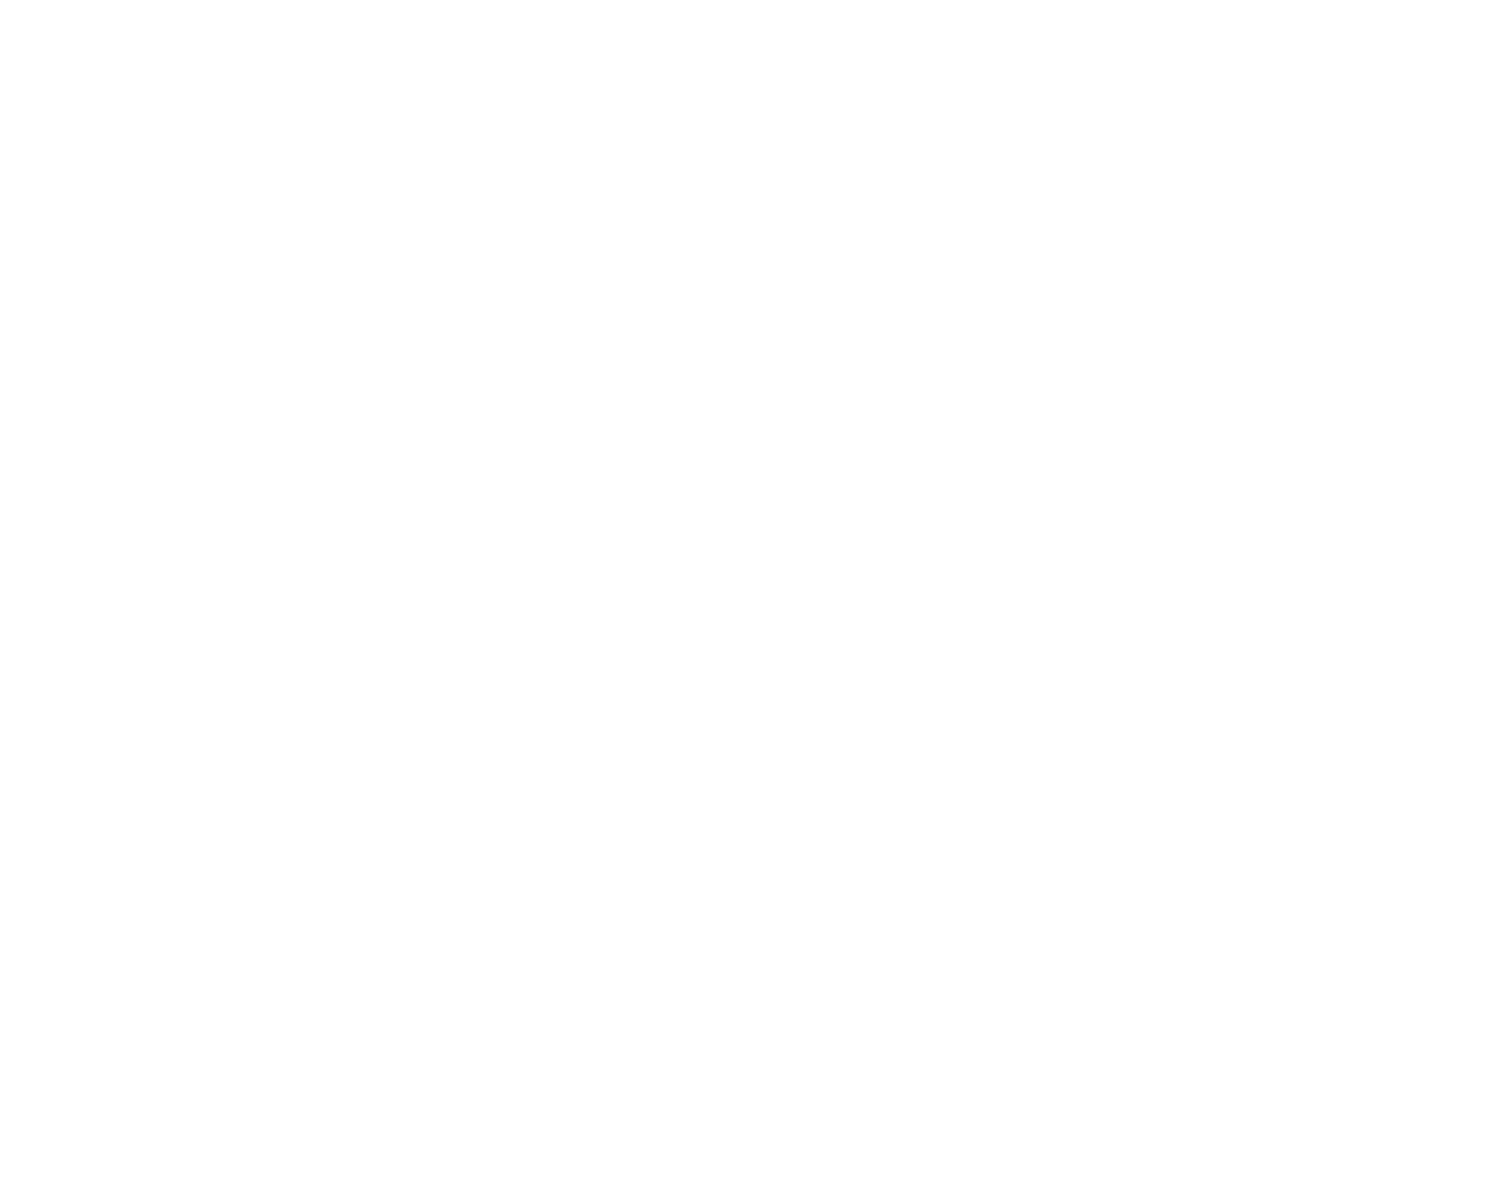 Texas Classic Broncos 